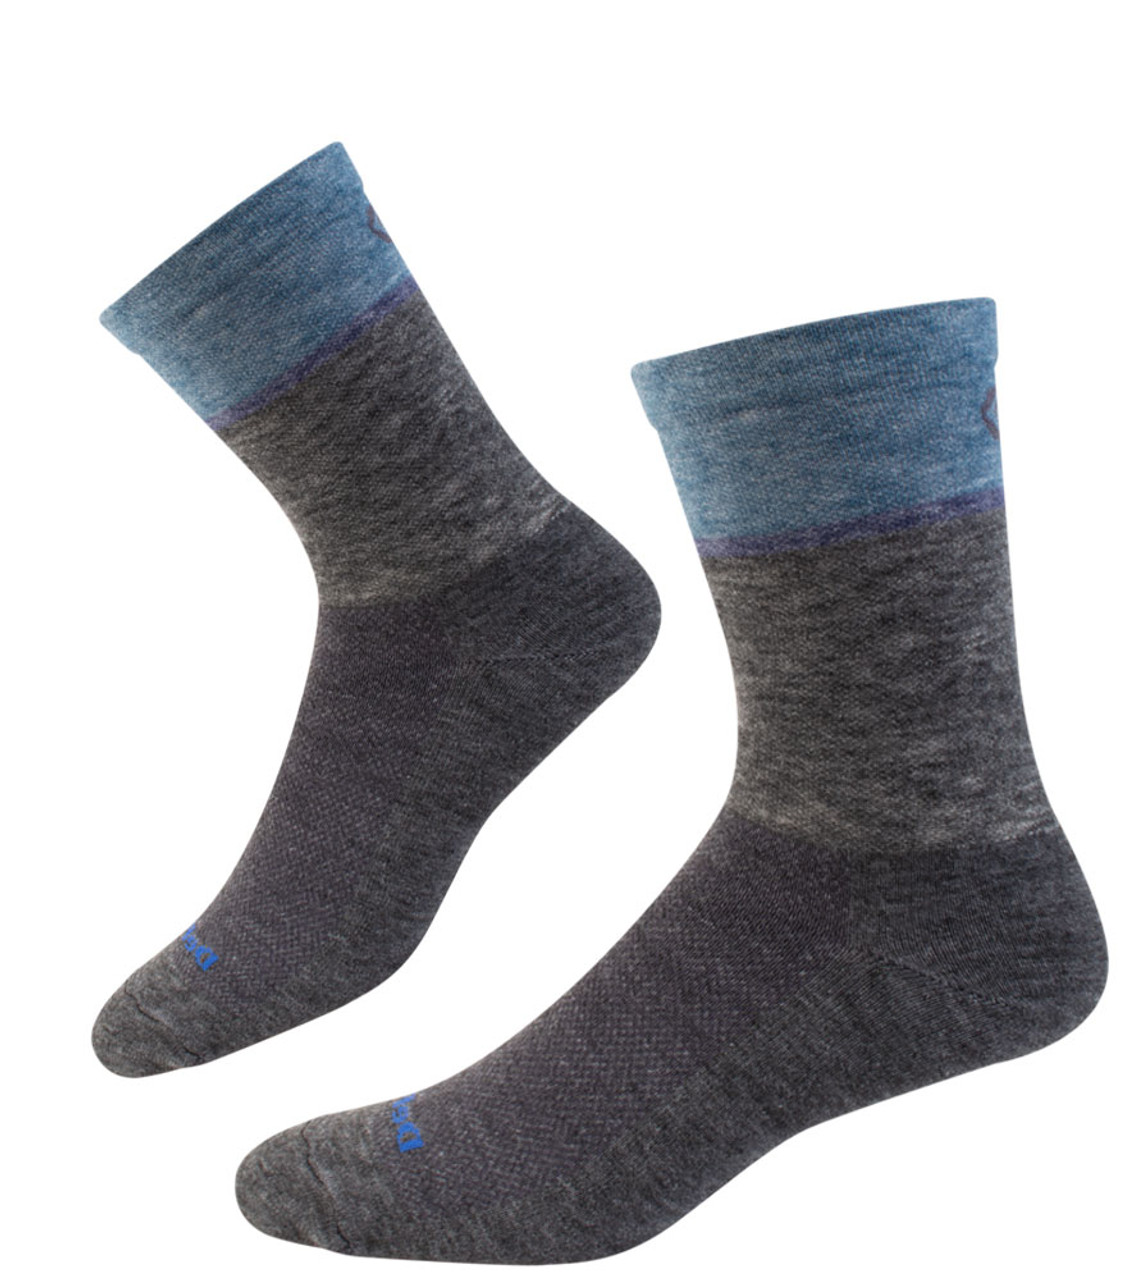 Aero Tech Designs X DeFeet Venture Merino Wool 6 Inch Cycling Socks